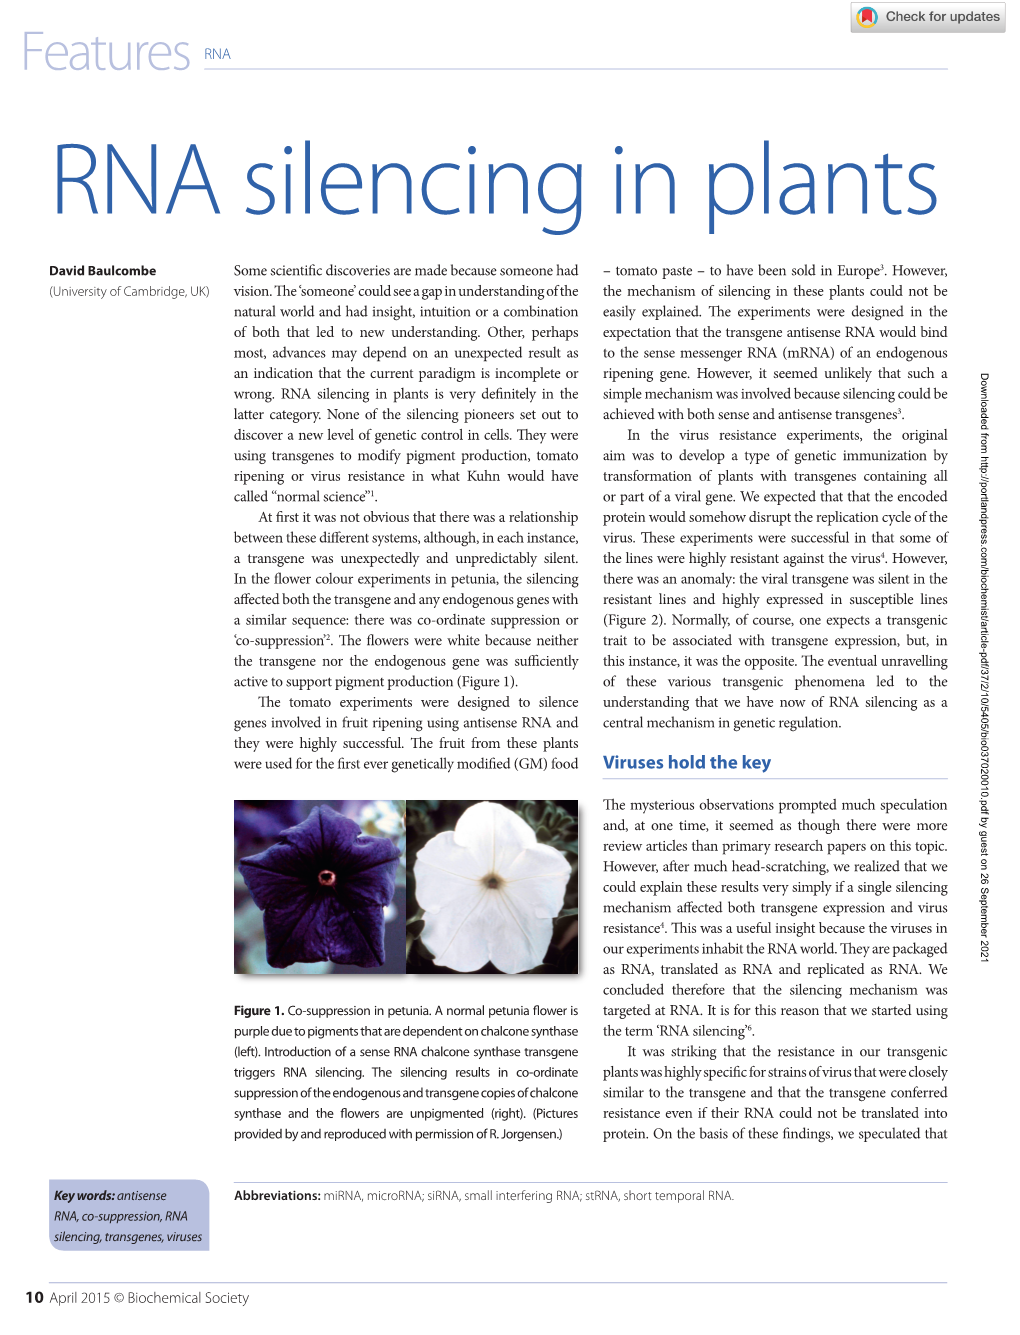 RNA Silencing in Plants